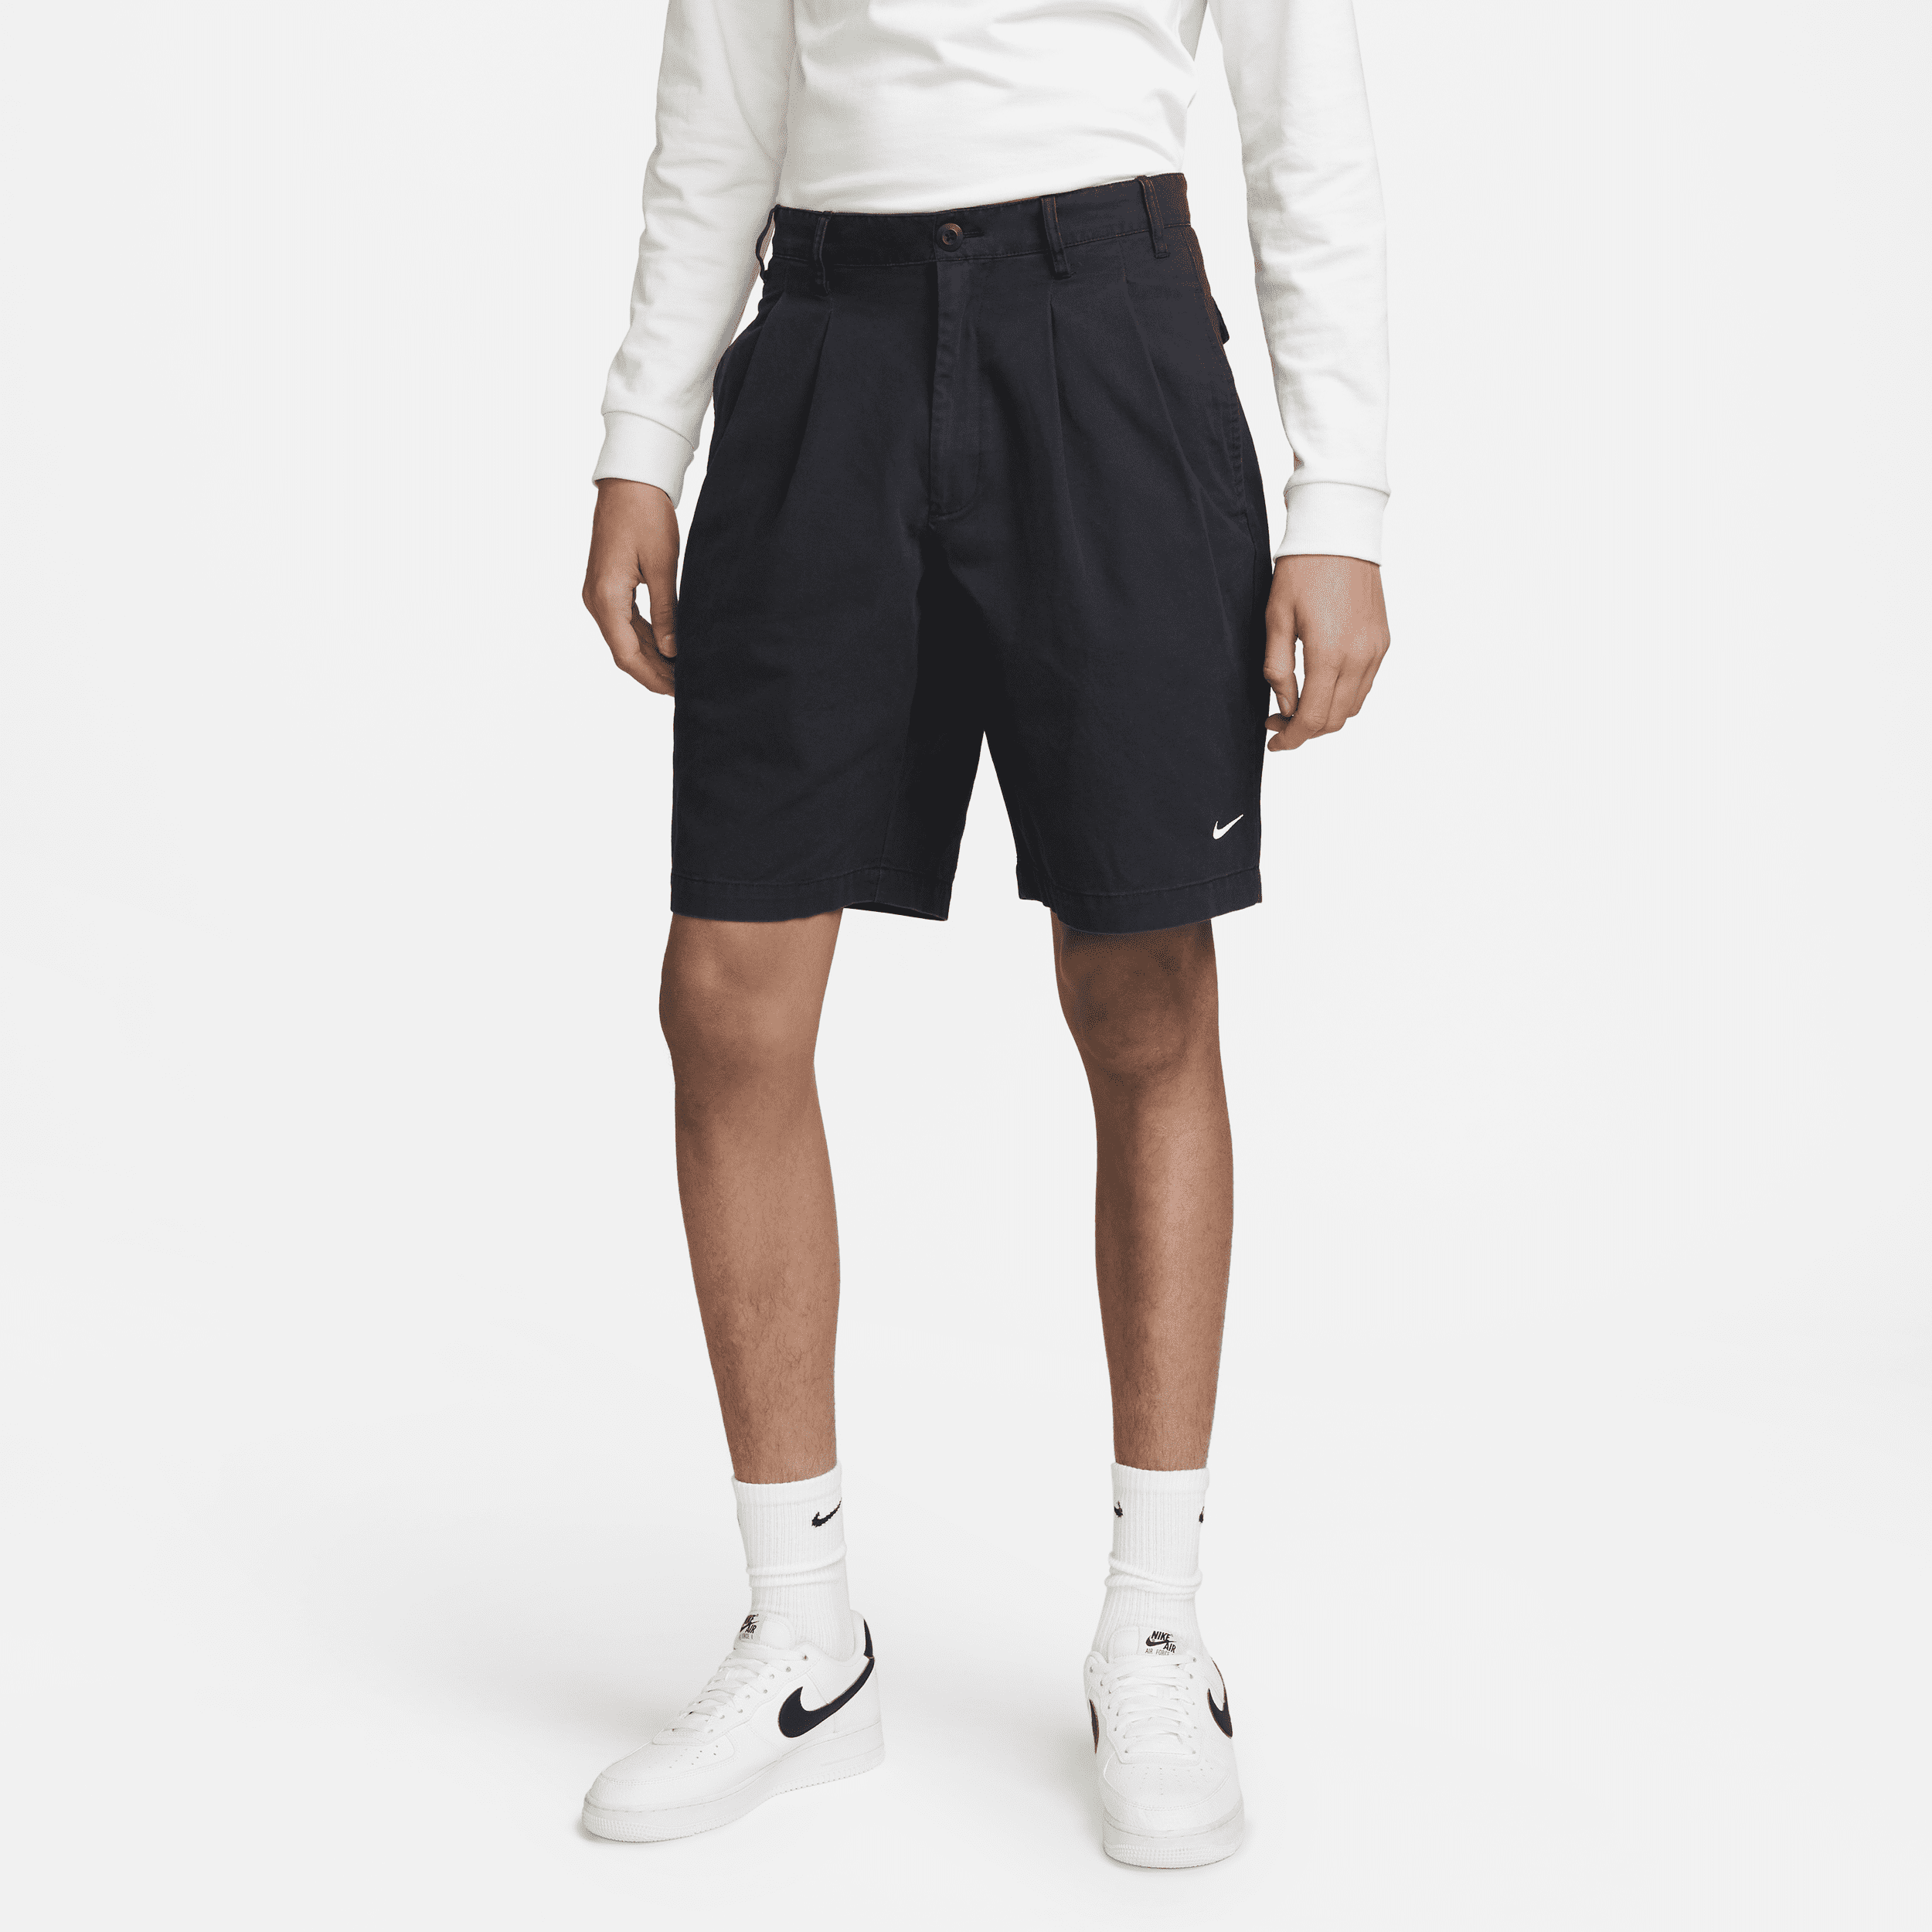 Nike Life Pantalón corto chino plisado - Hombre - Negro